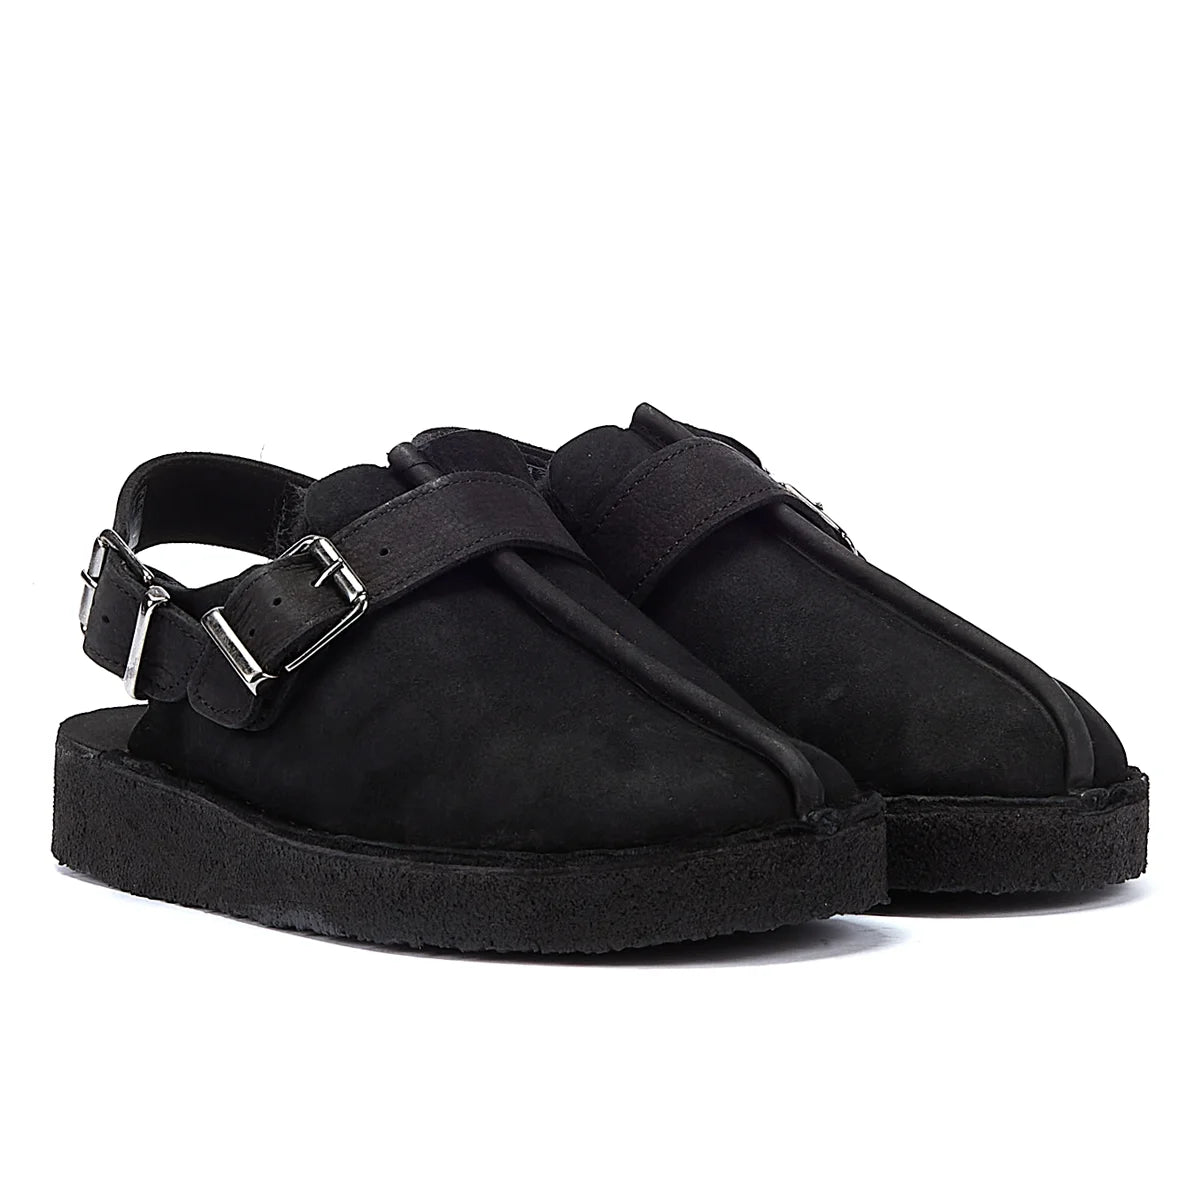 Clarks Originals Trek Mule Sling Lined Women’s Black Comfort Shoes